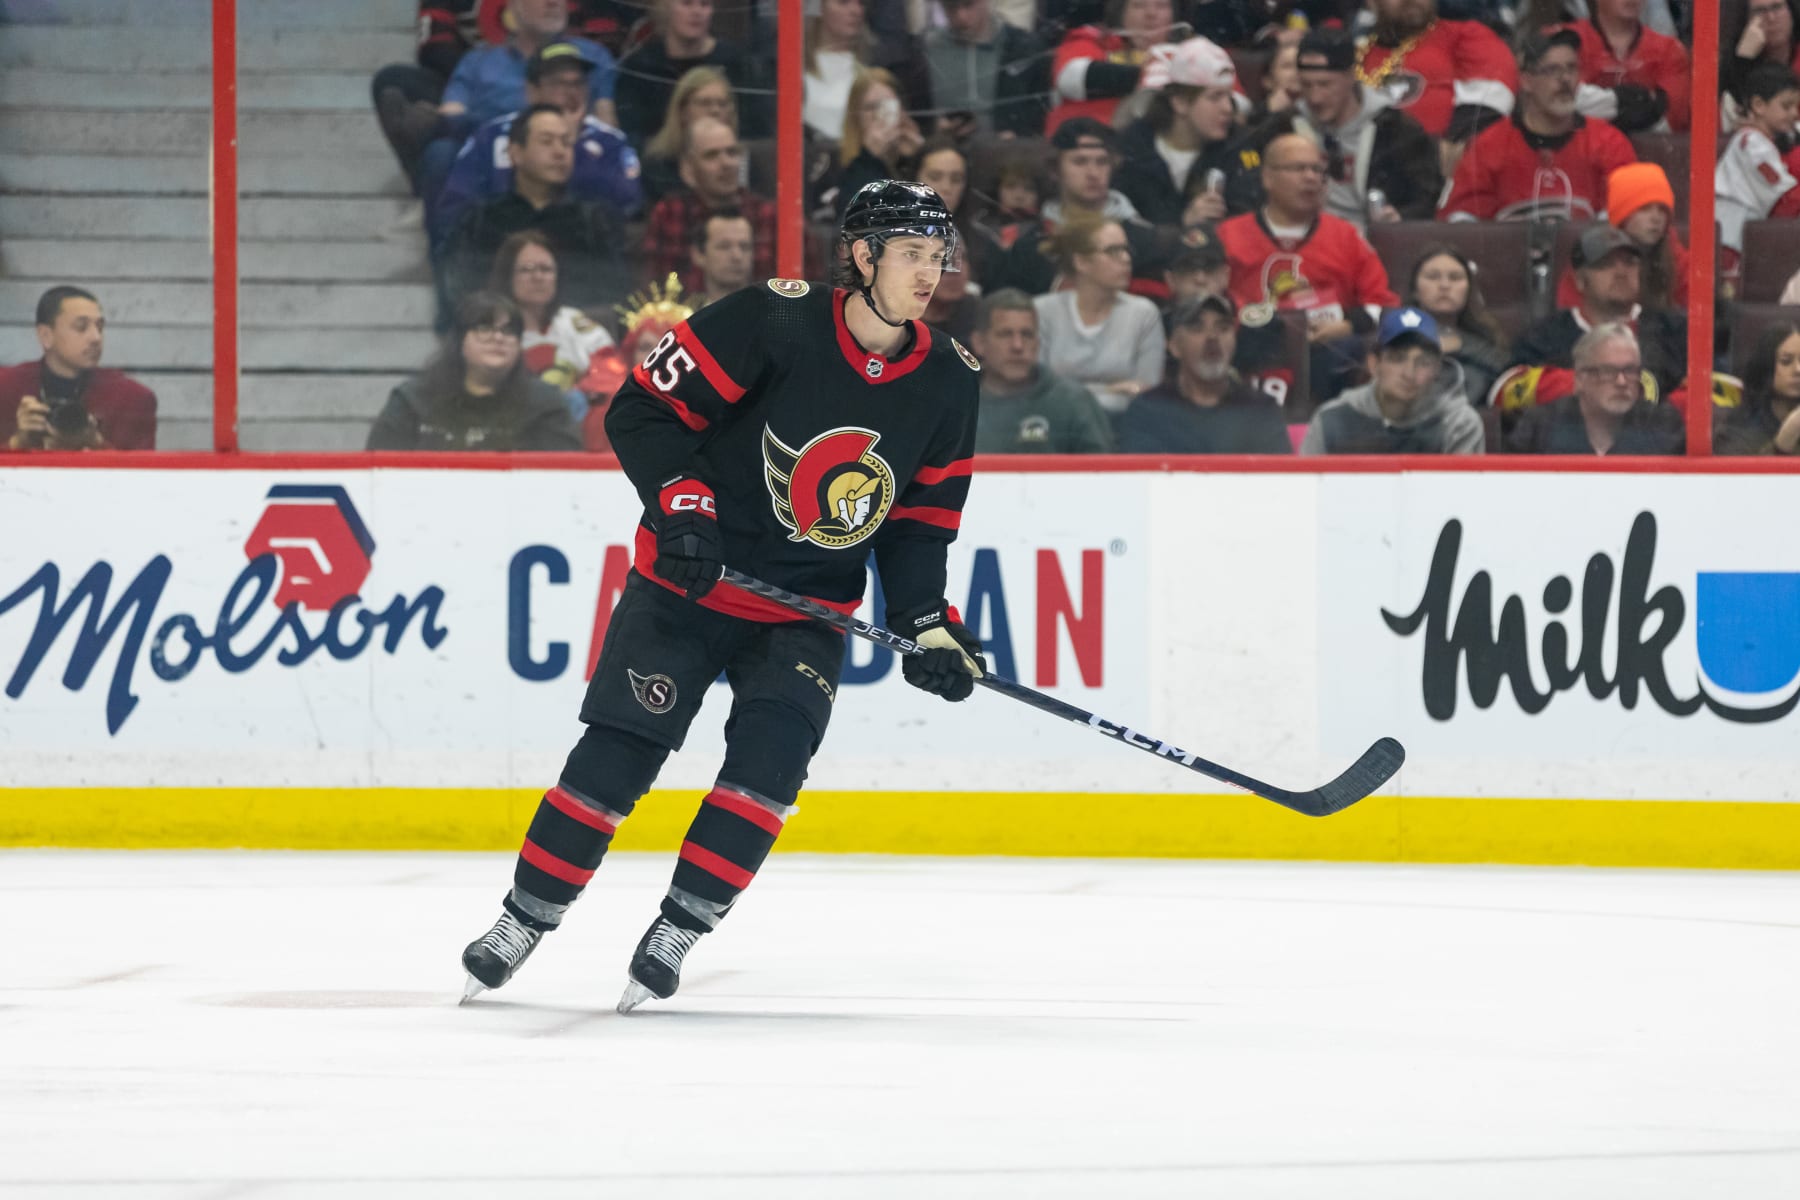 NHL Rumours: Jake Sanderson Extension Options for Senators